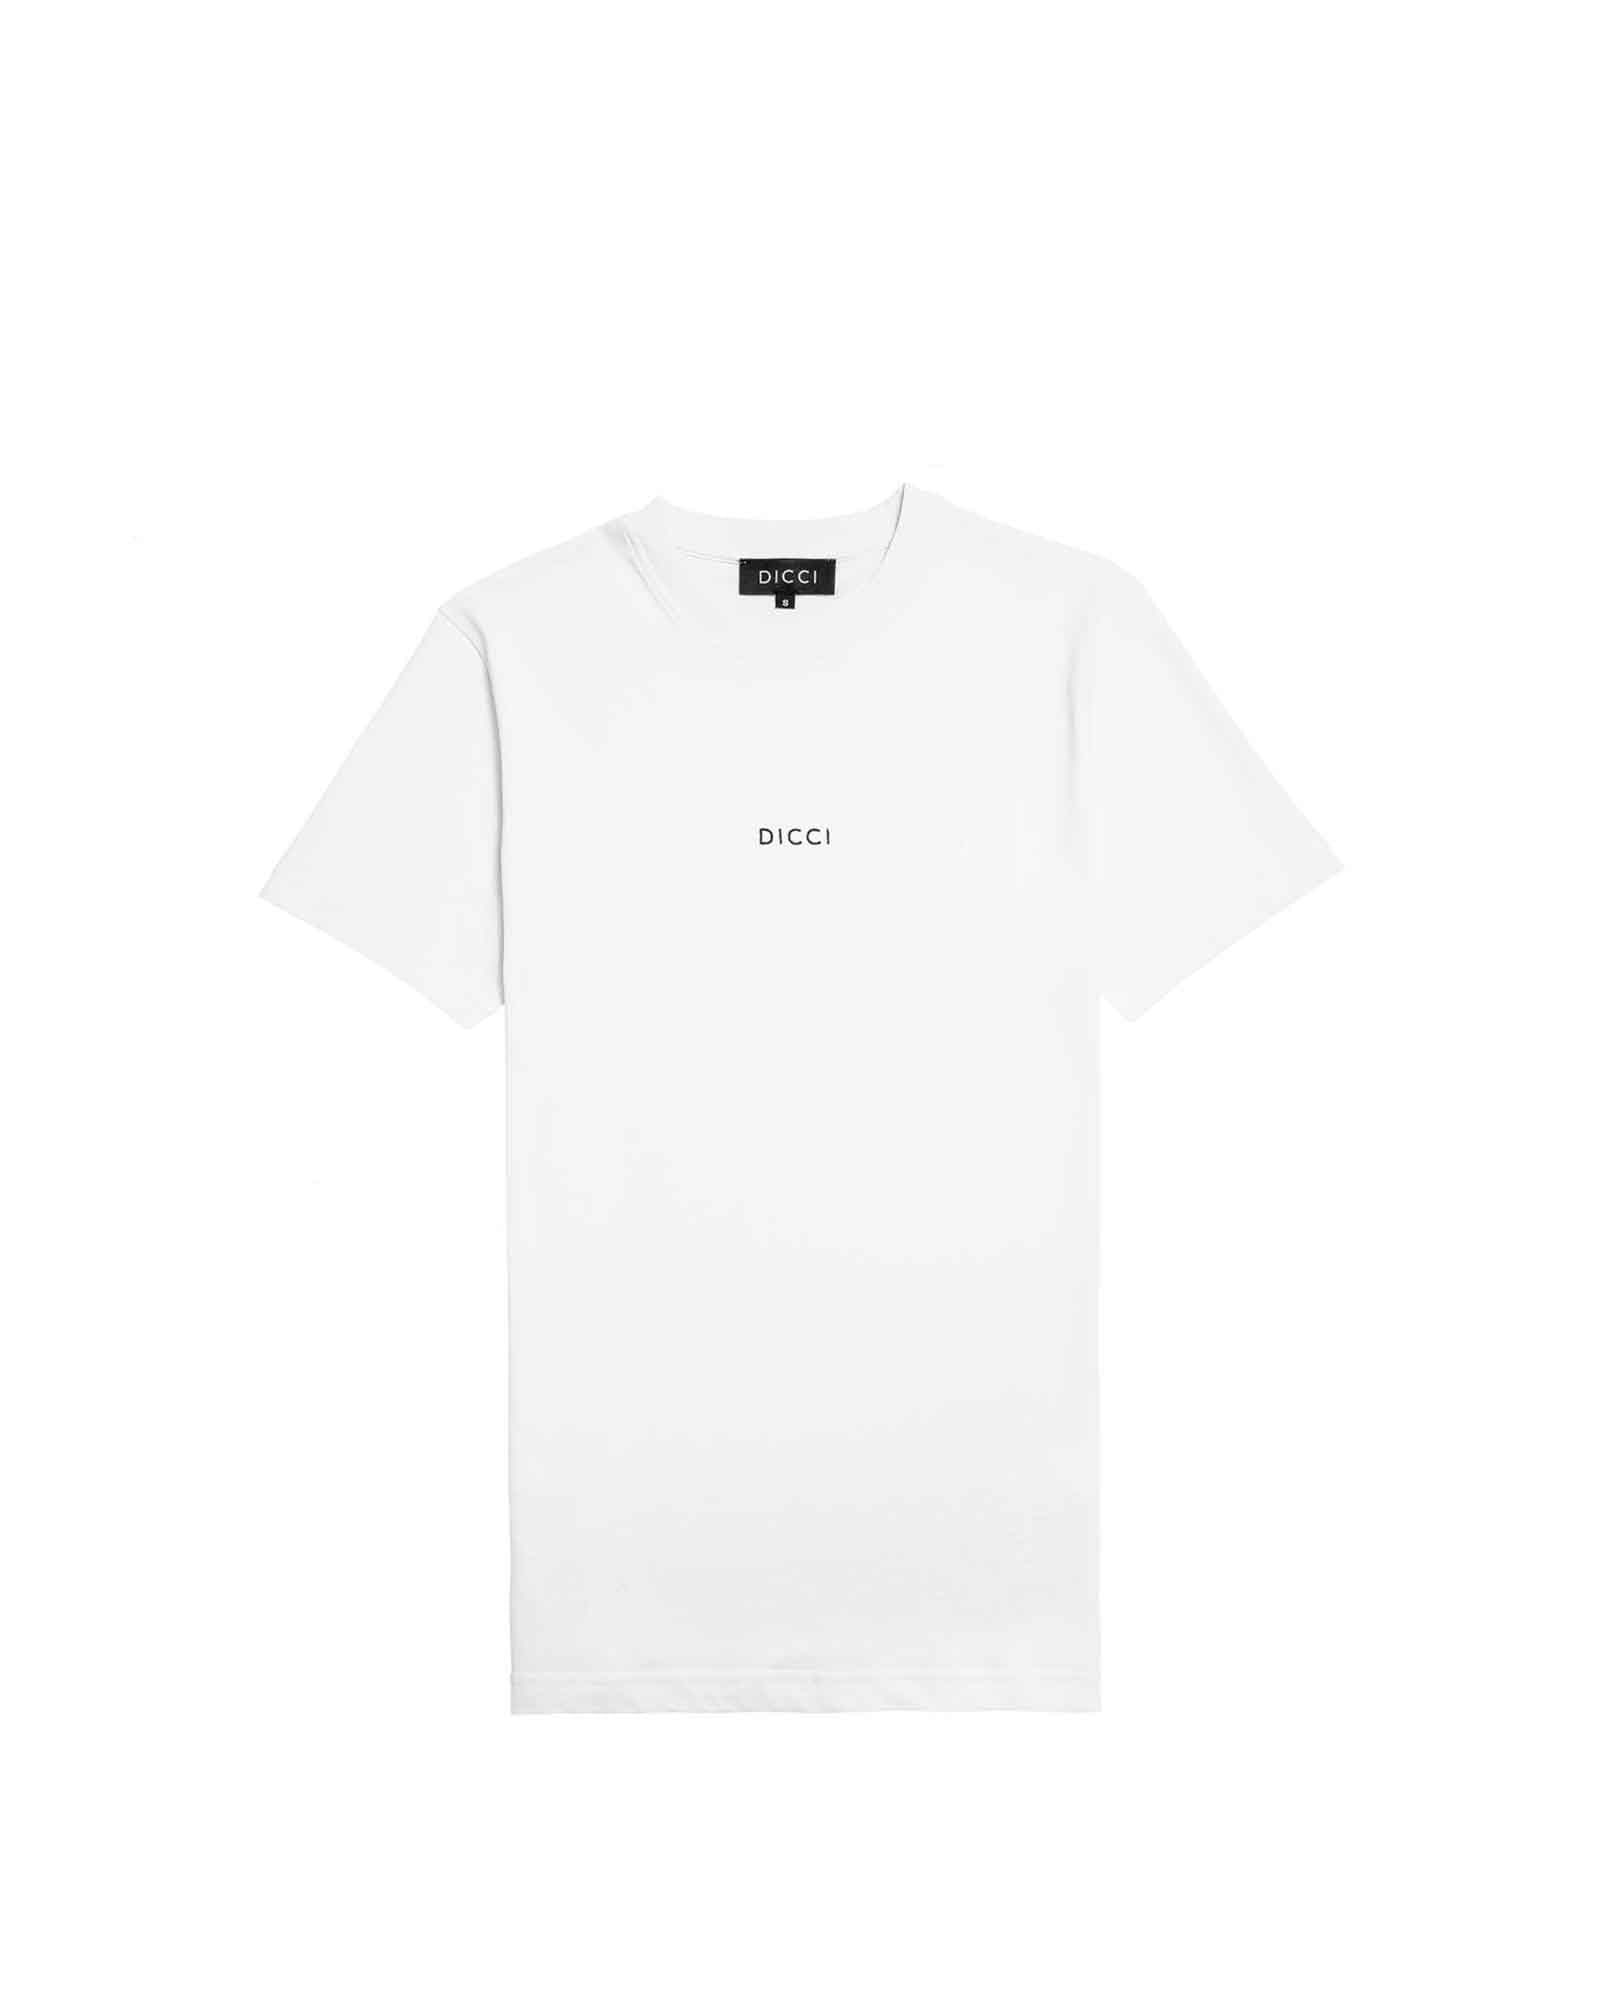 Dicci white T-shirt - Basic white T-shirt - Online Unissex Clothing - Dicci